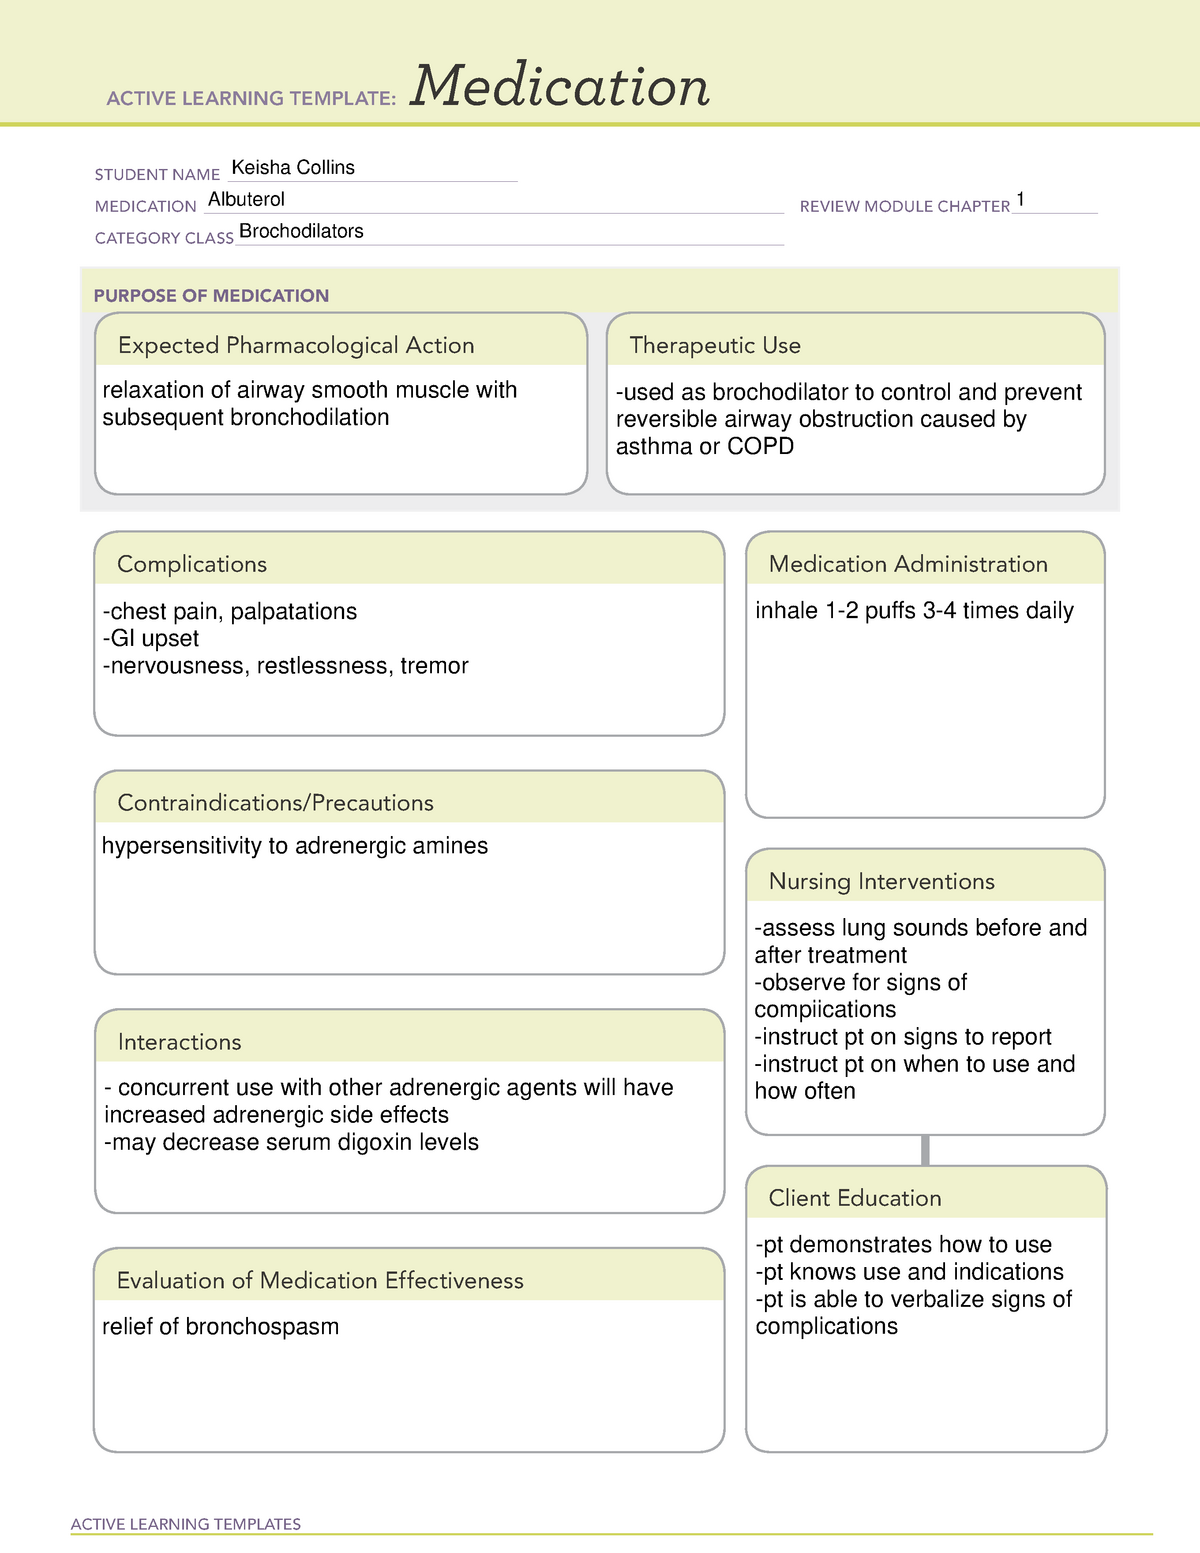 albuterol-medication-template